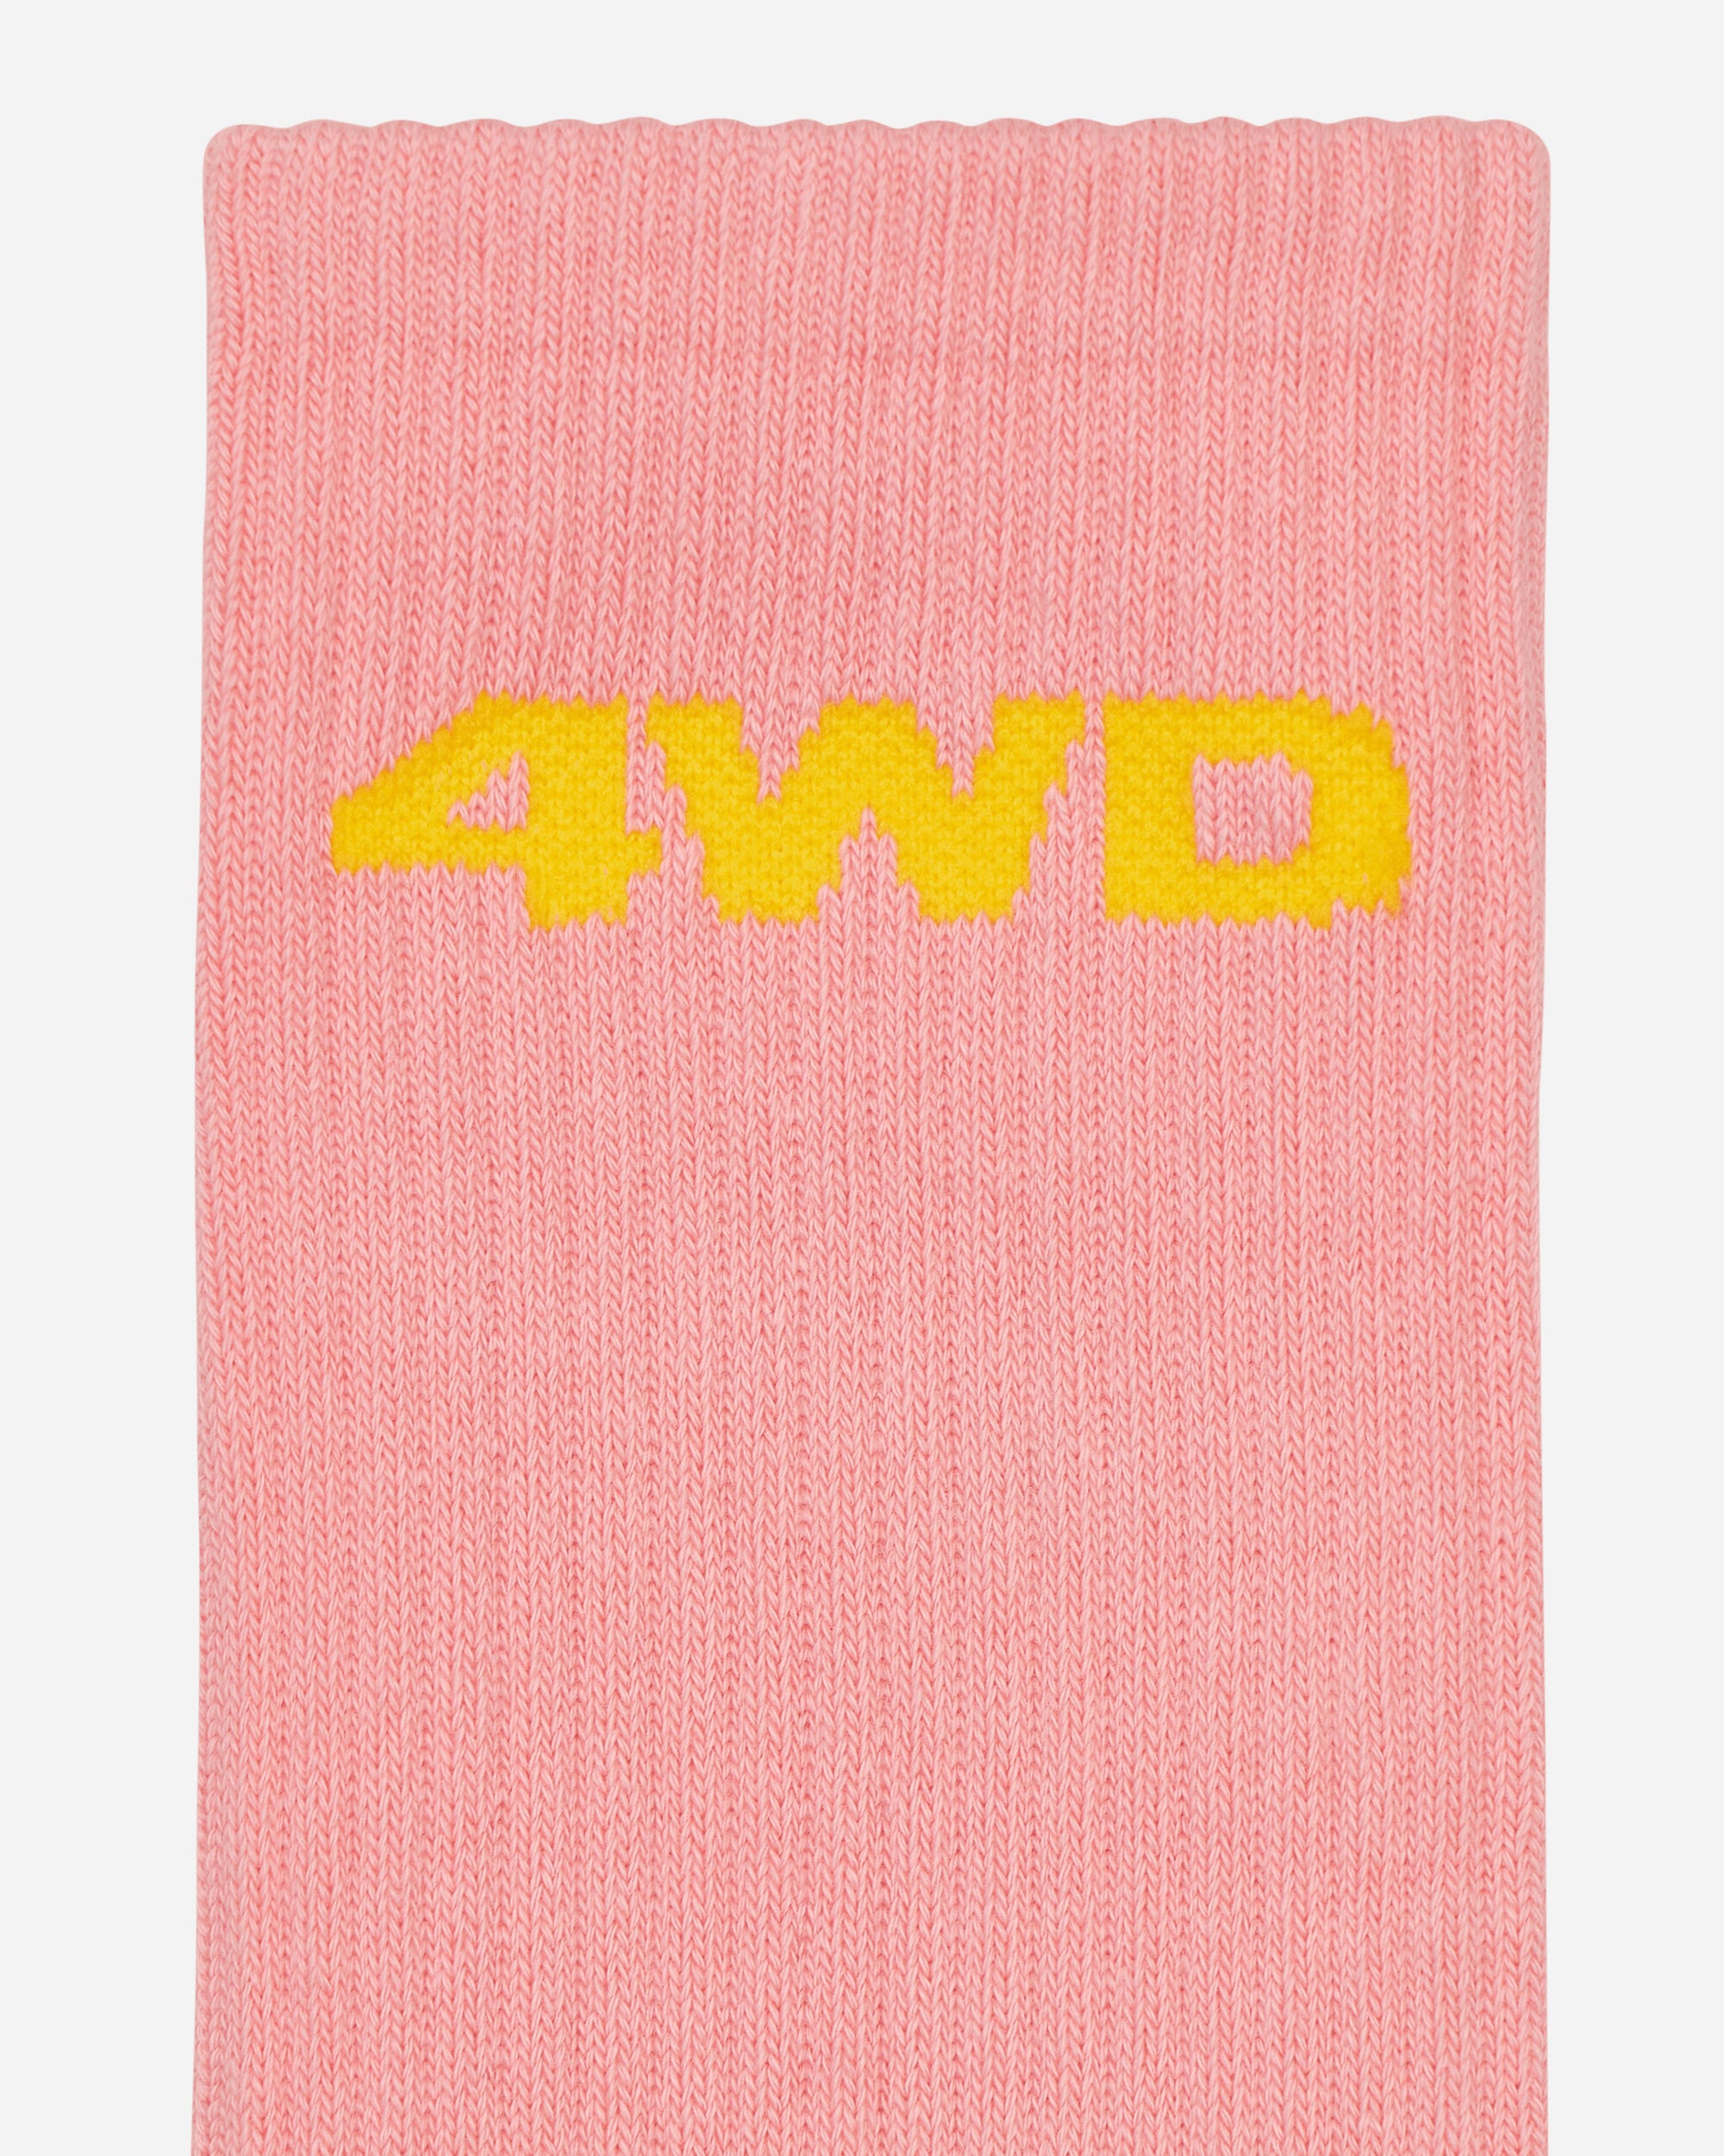 4 Worth Doing 4Wd Logo Socks Pink Underwear Socks 4WDSS23SC1 PINK